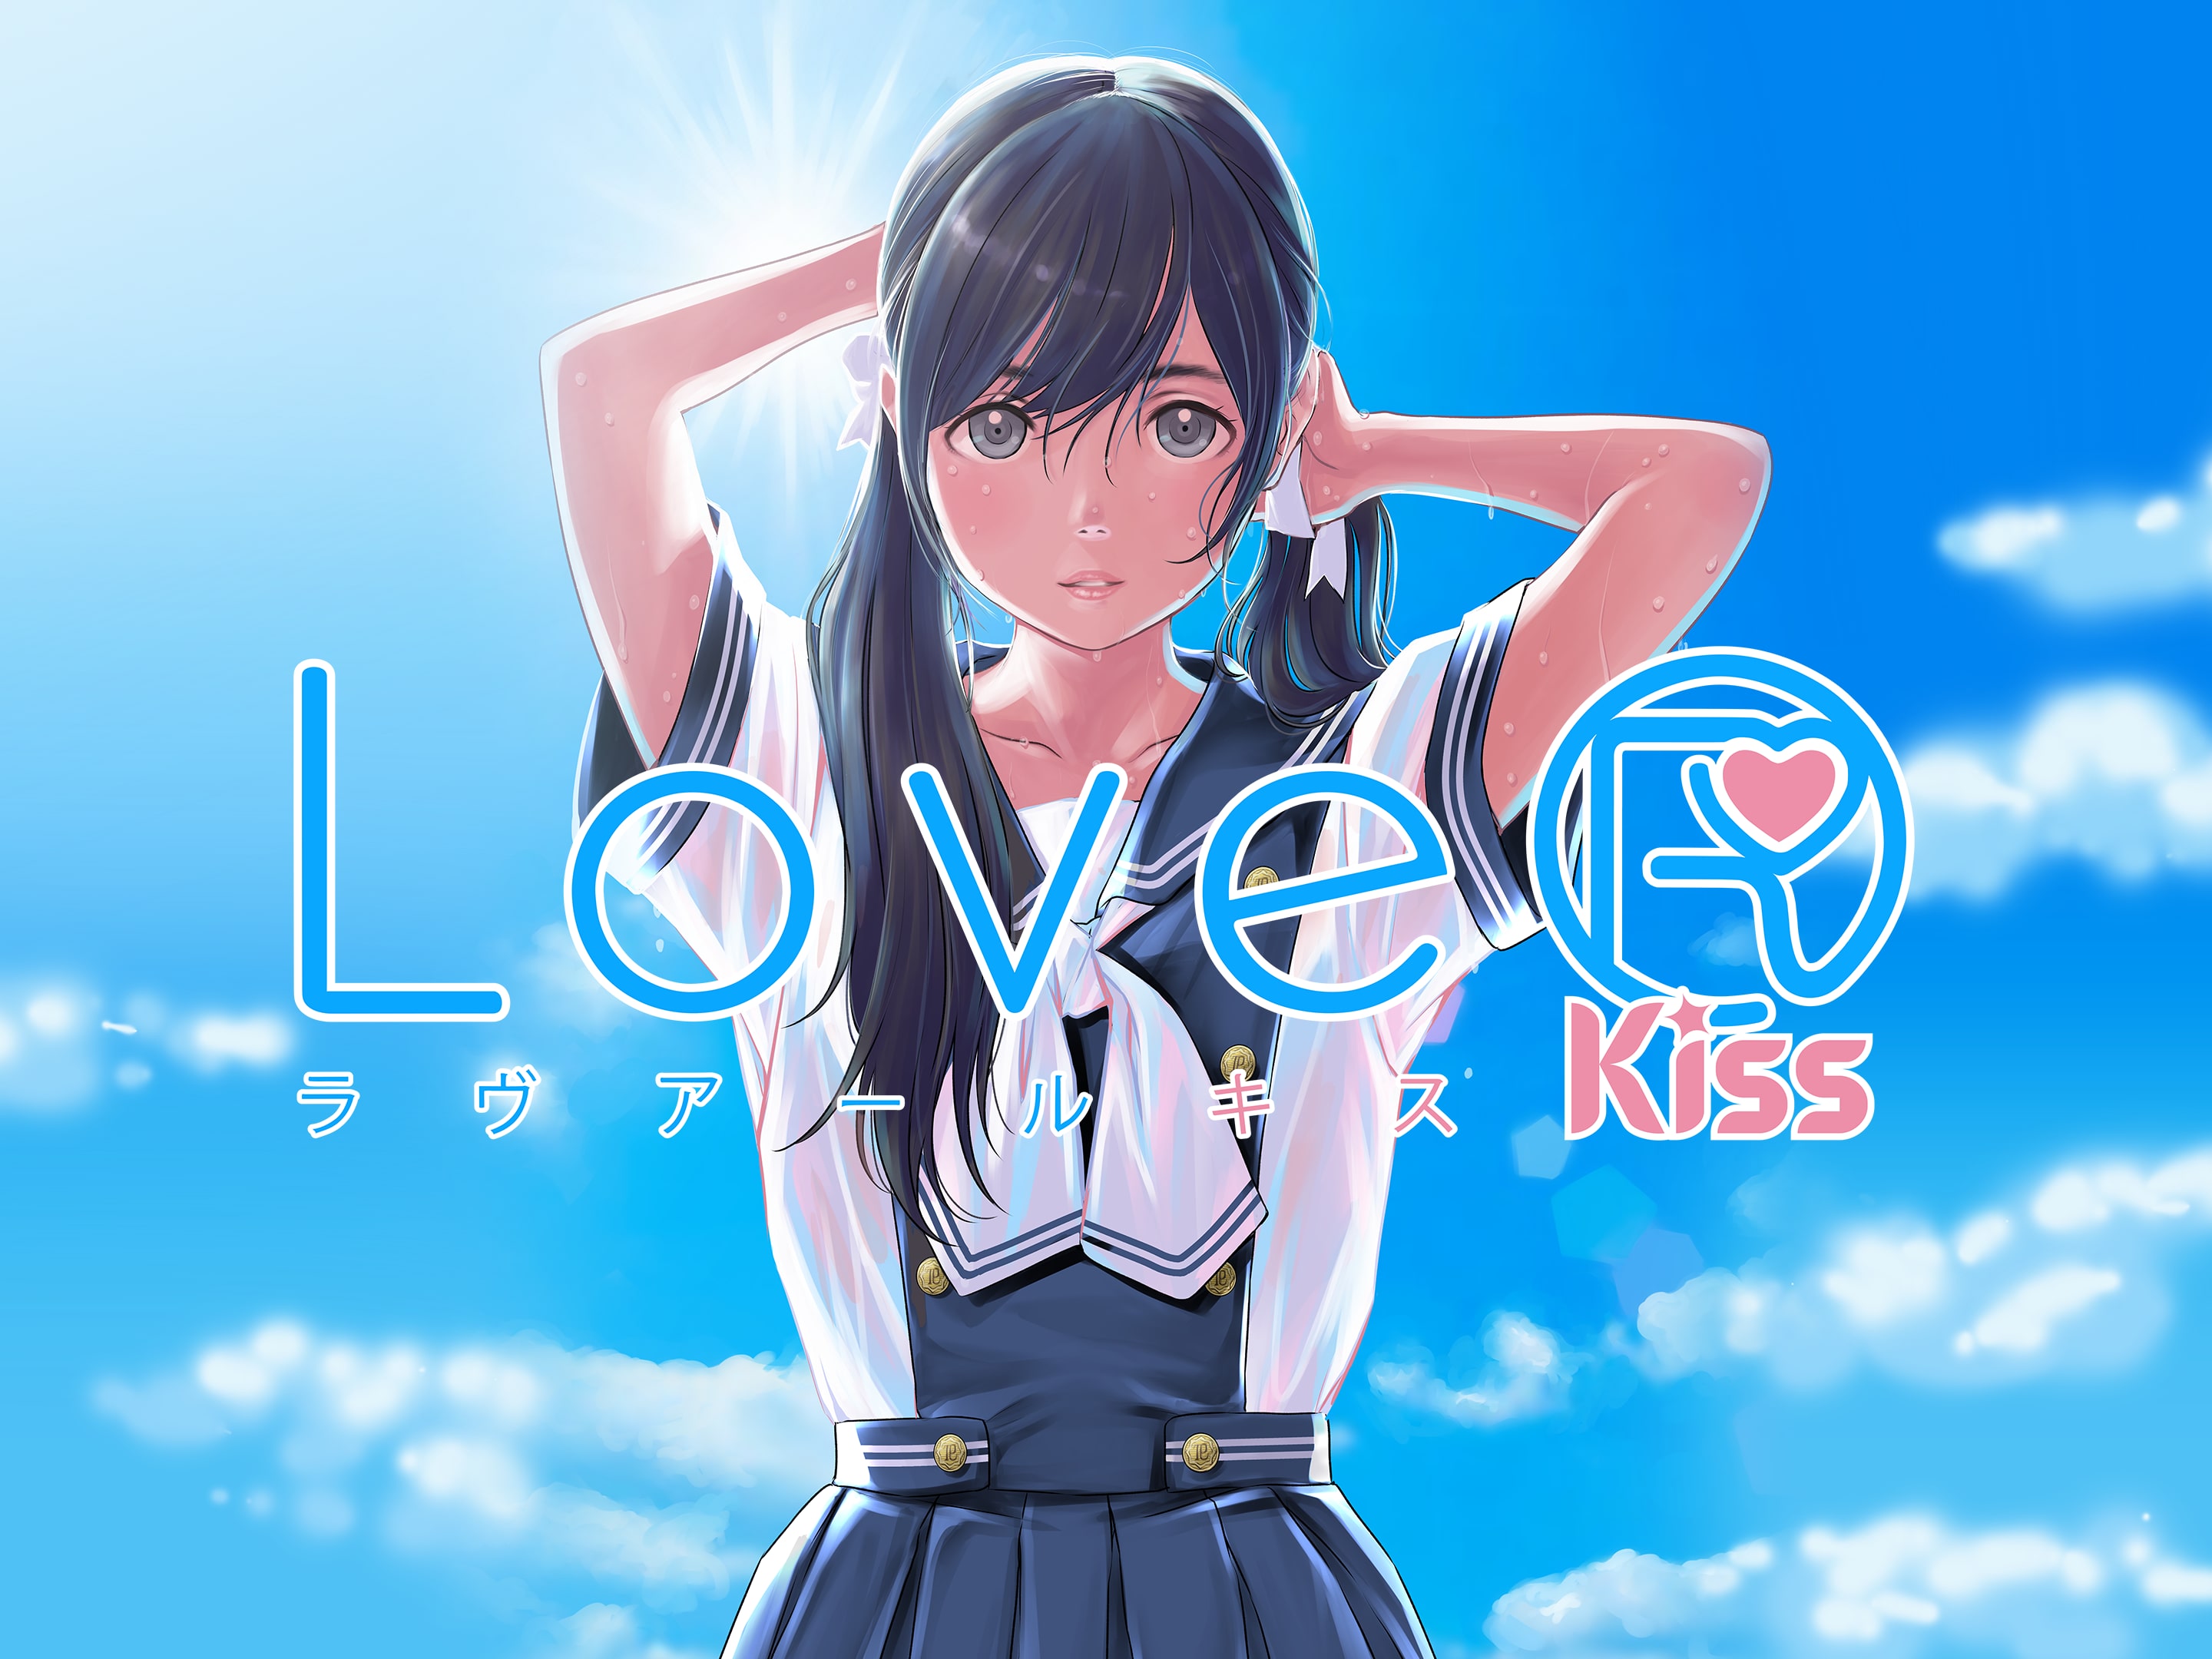 LoveR Kiss（ラヴアール キス）